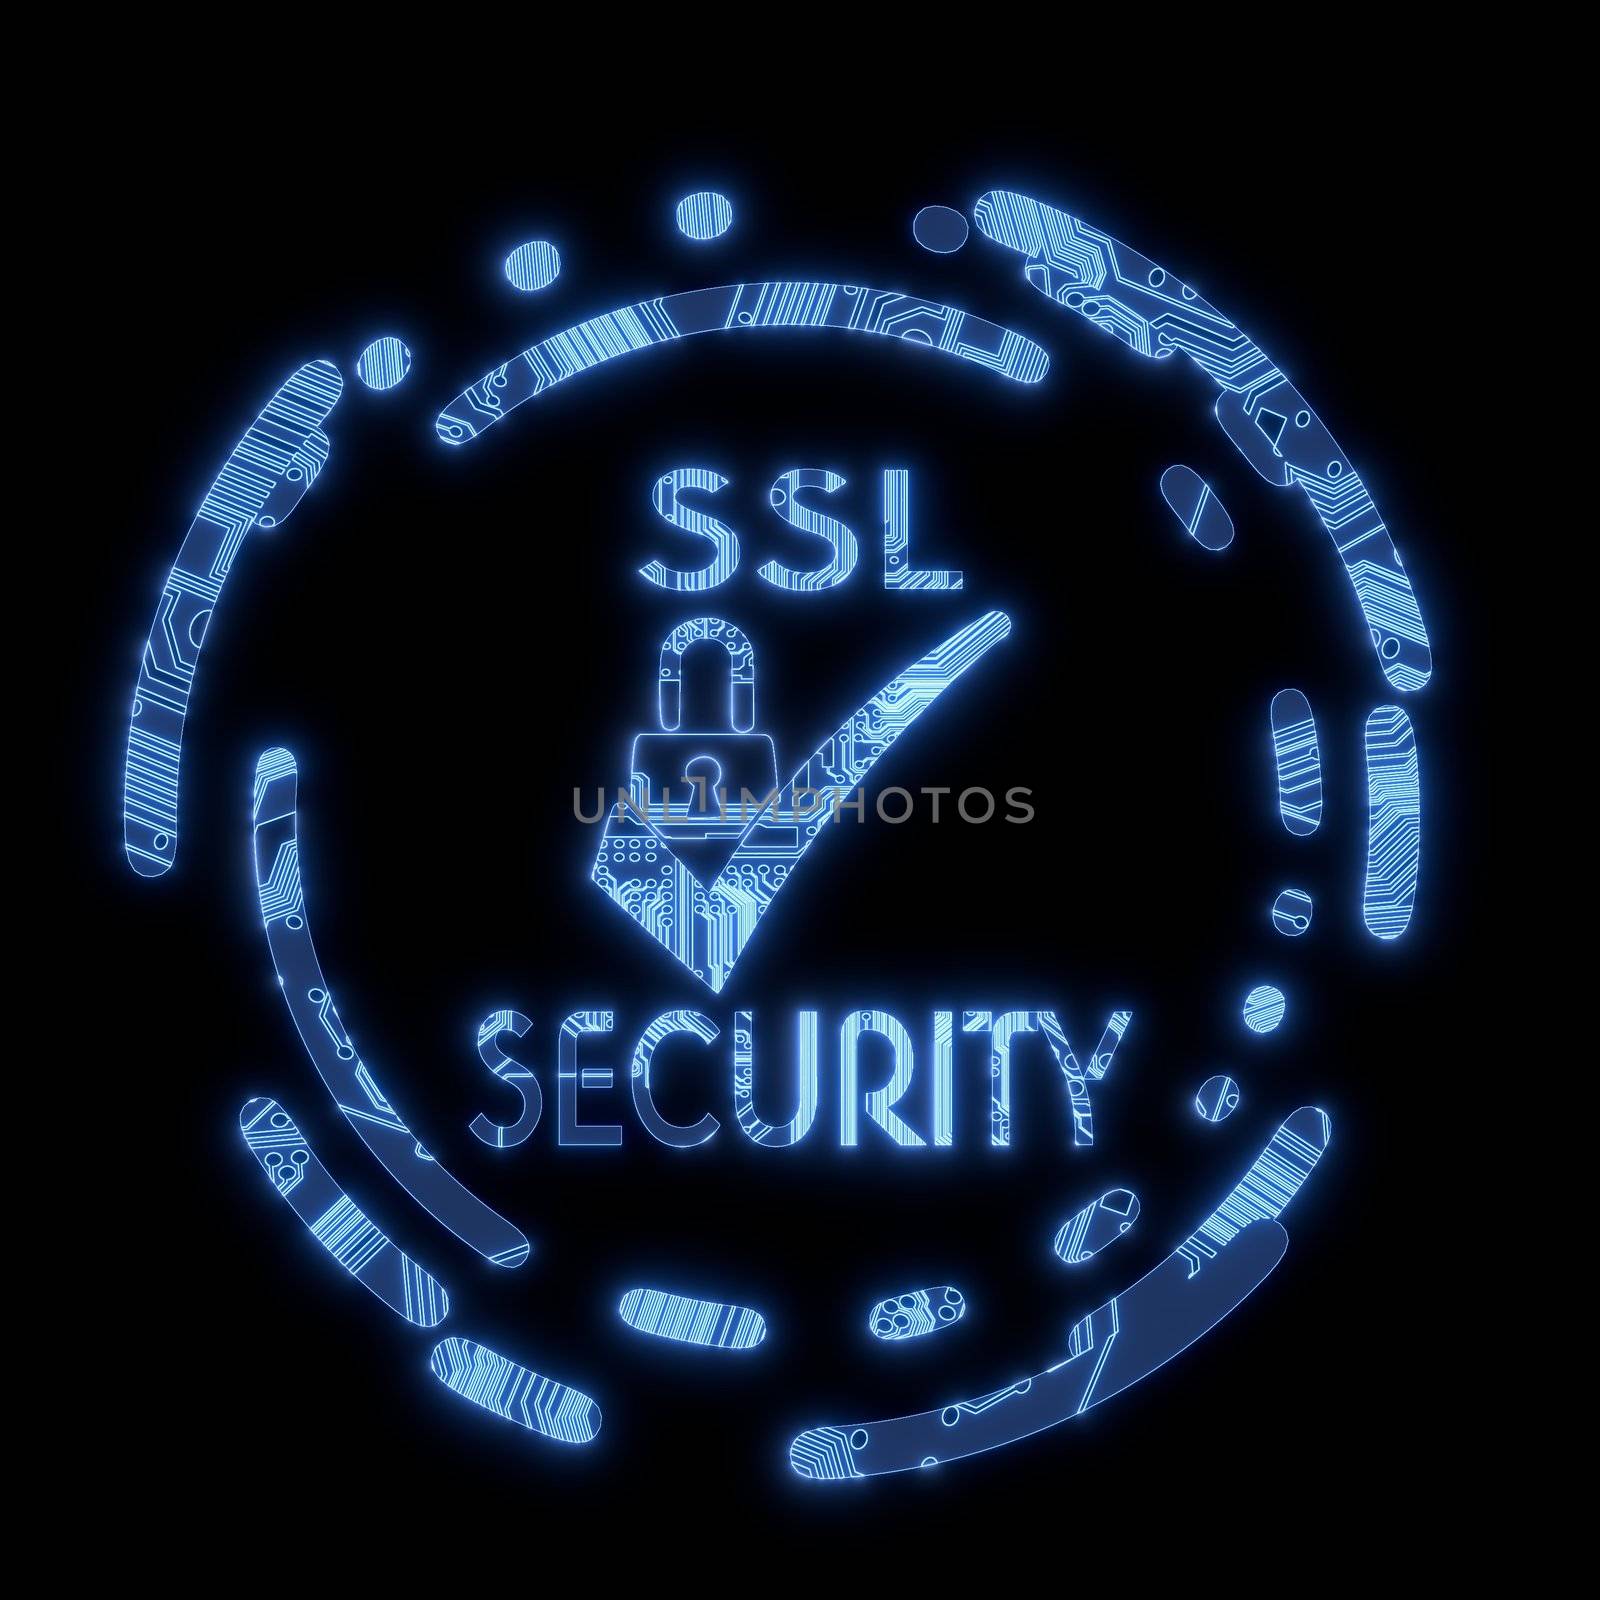 Illuminated blue computer SSL symbol on a computer chip by onirb